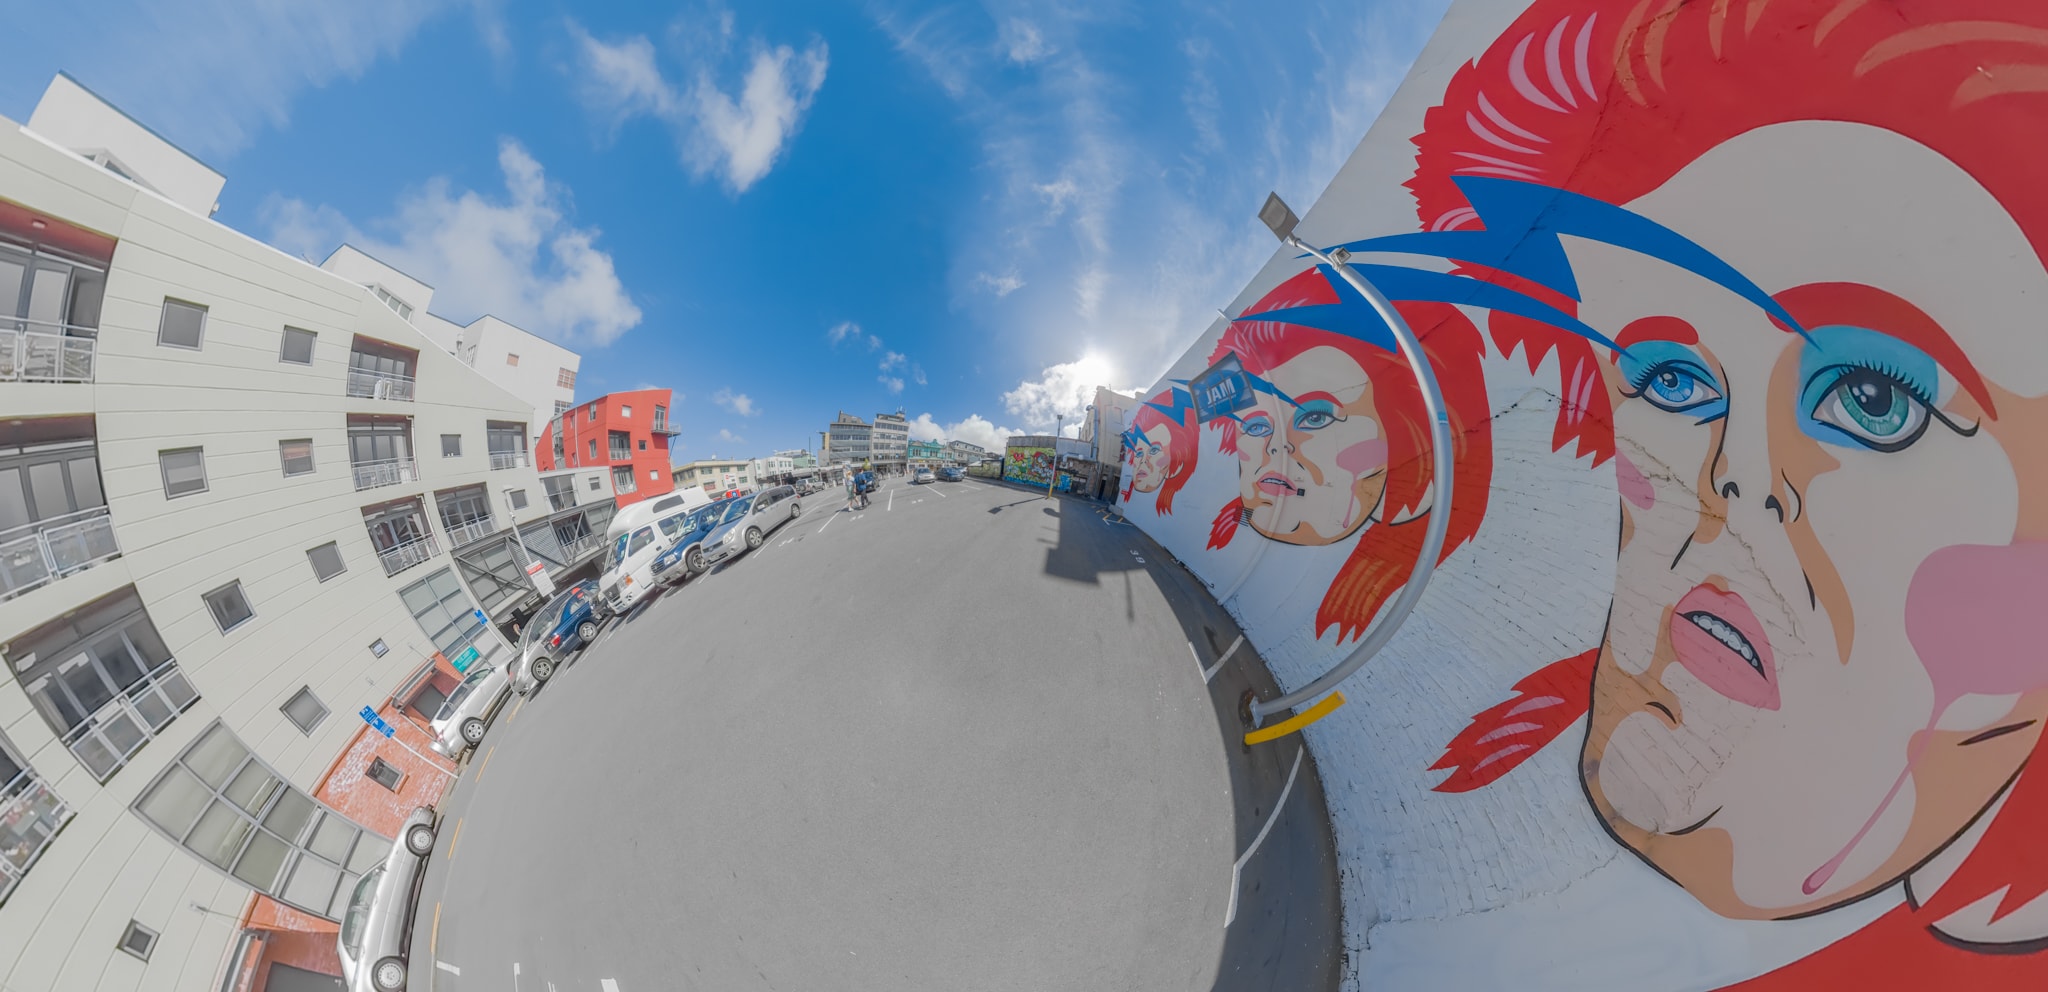 Bowie Street Painting Wellington Nz - Planet